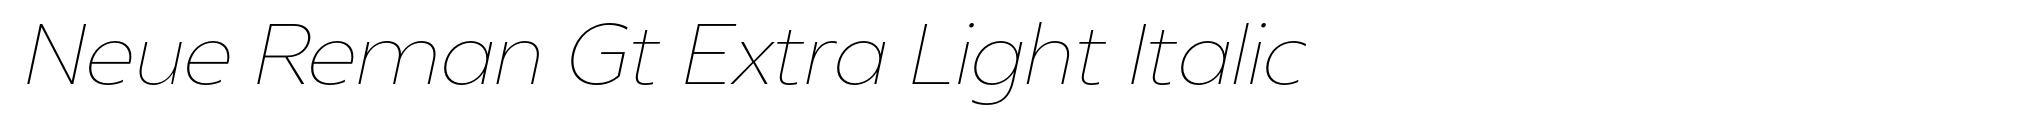 Neue Reman Gt Extra Light Italic image